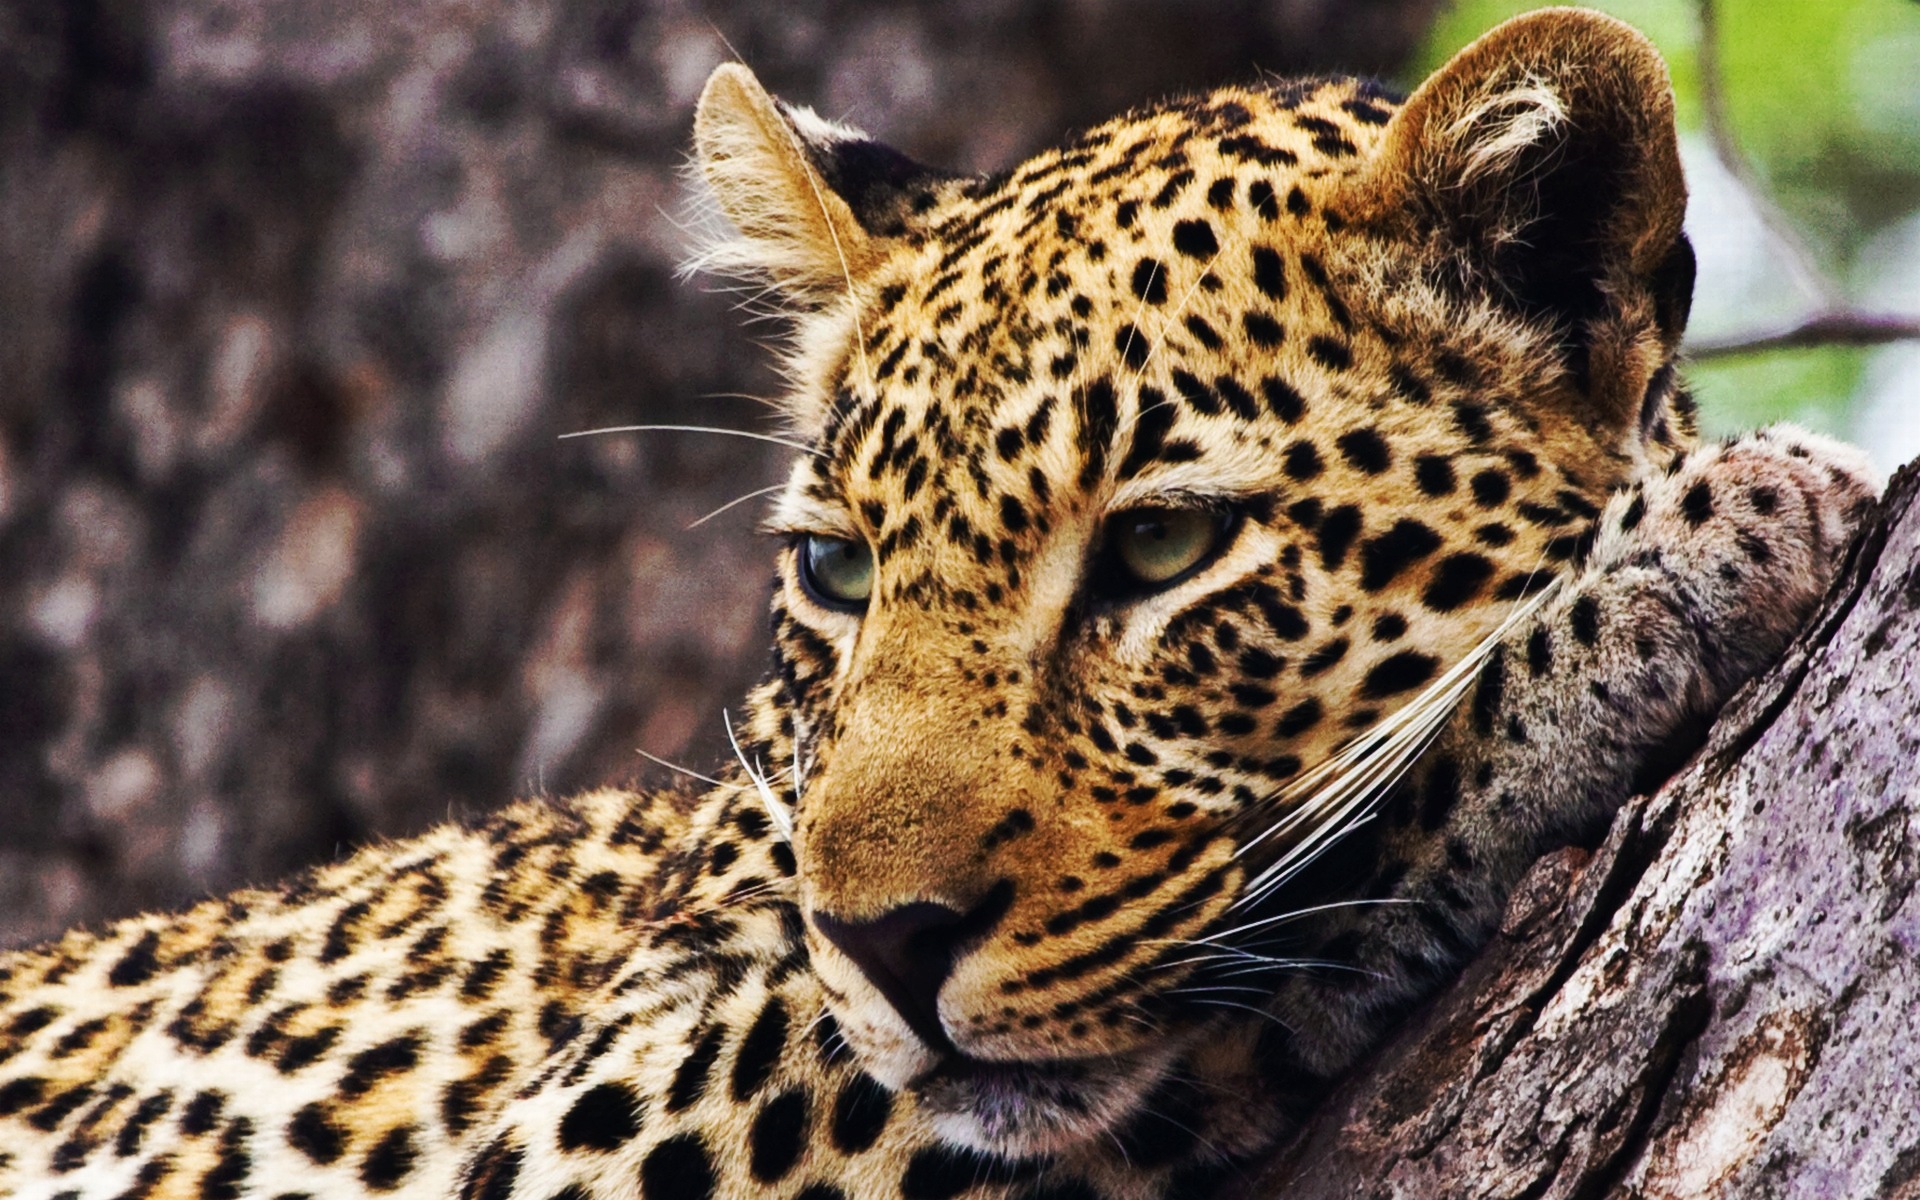 Cheetah Wallpaper For Desktop Pictures To Pin